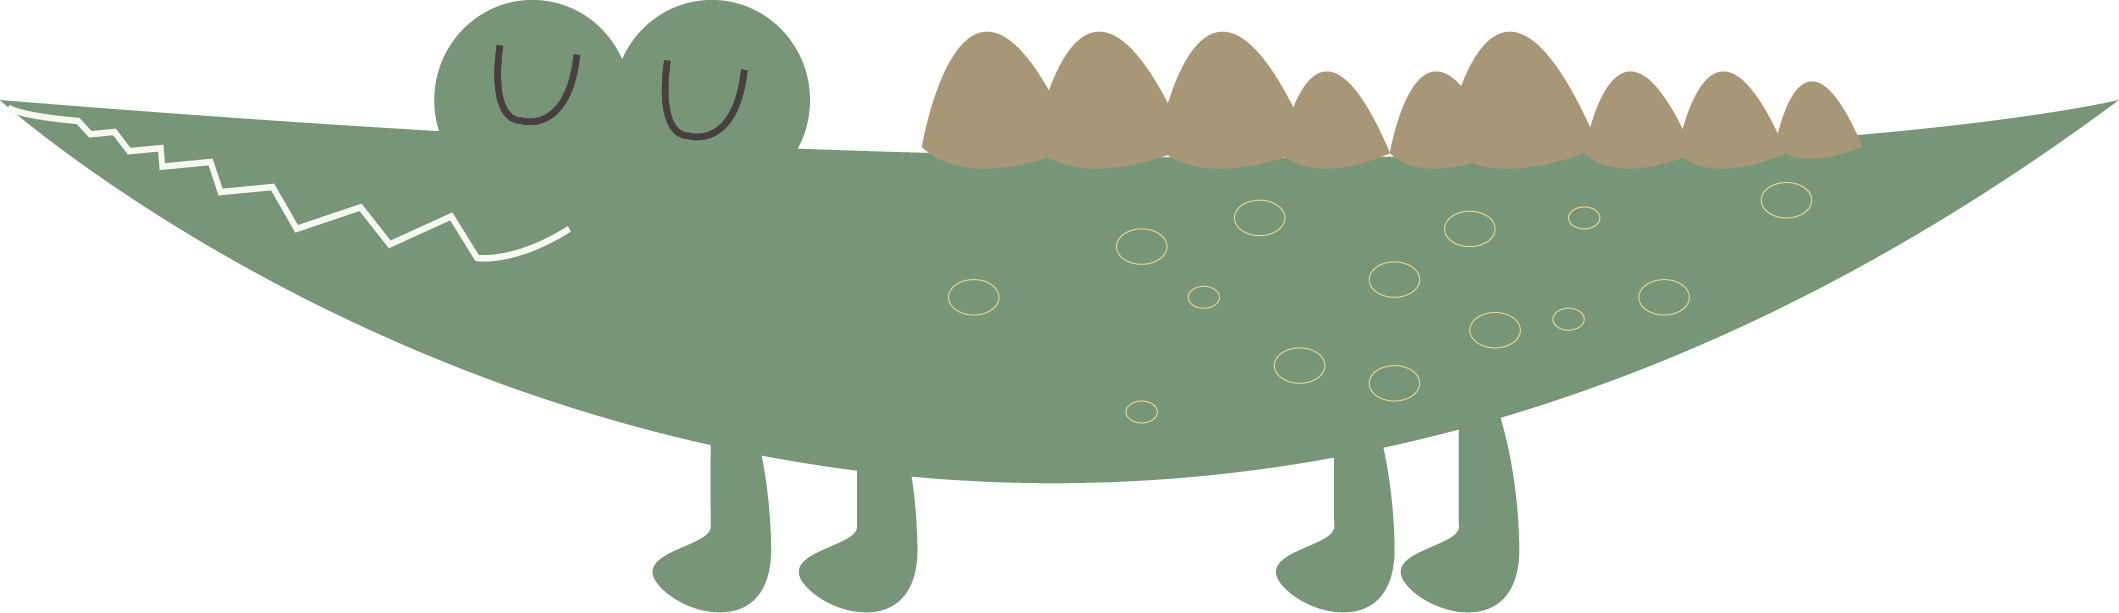 Crocodile Cartoon Illustration - Vector Graphics (2119x613)